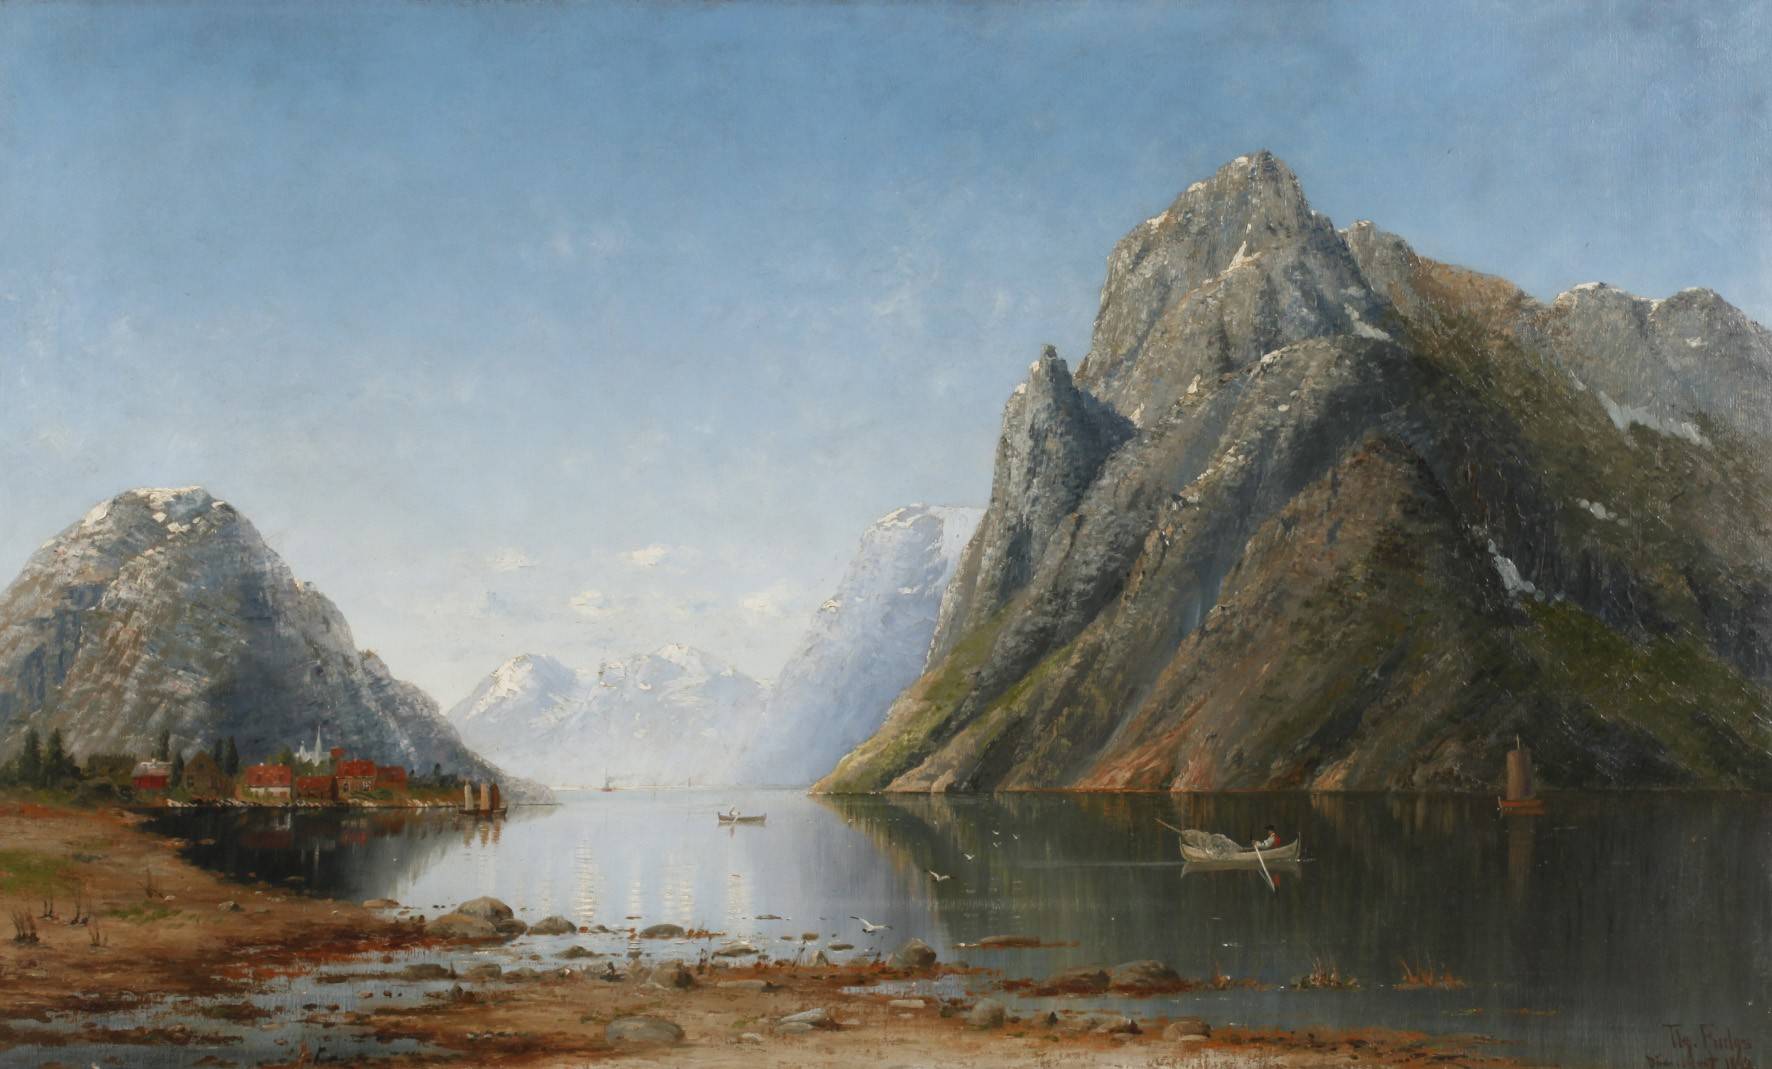 Therese Fuchs, ”Motiv am Nordfjord”